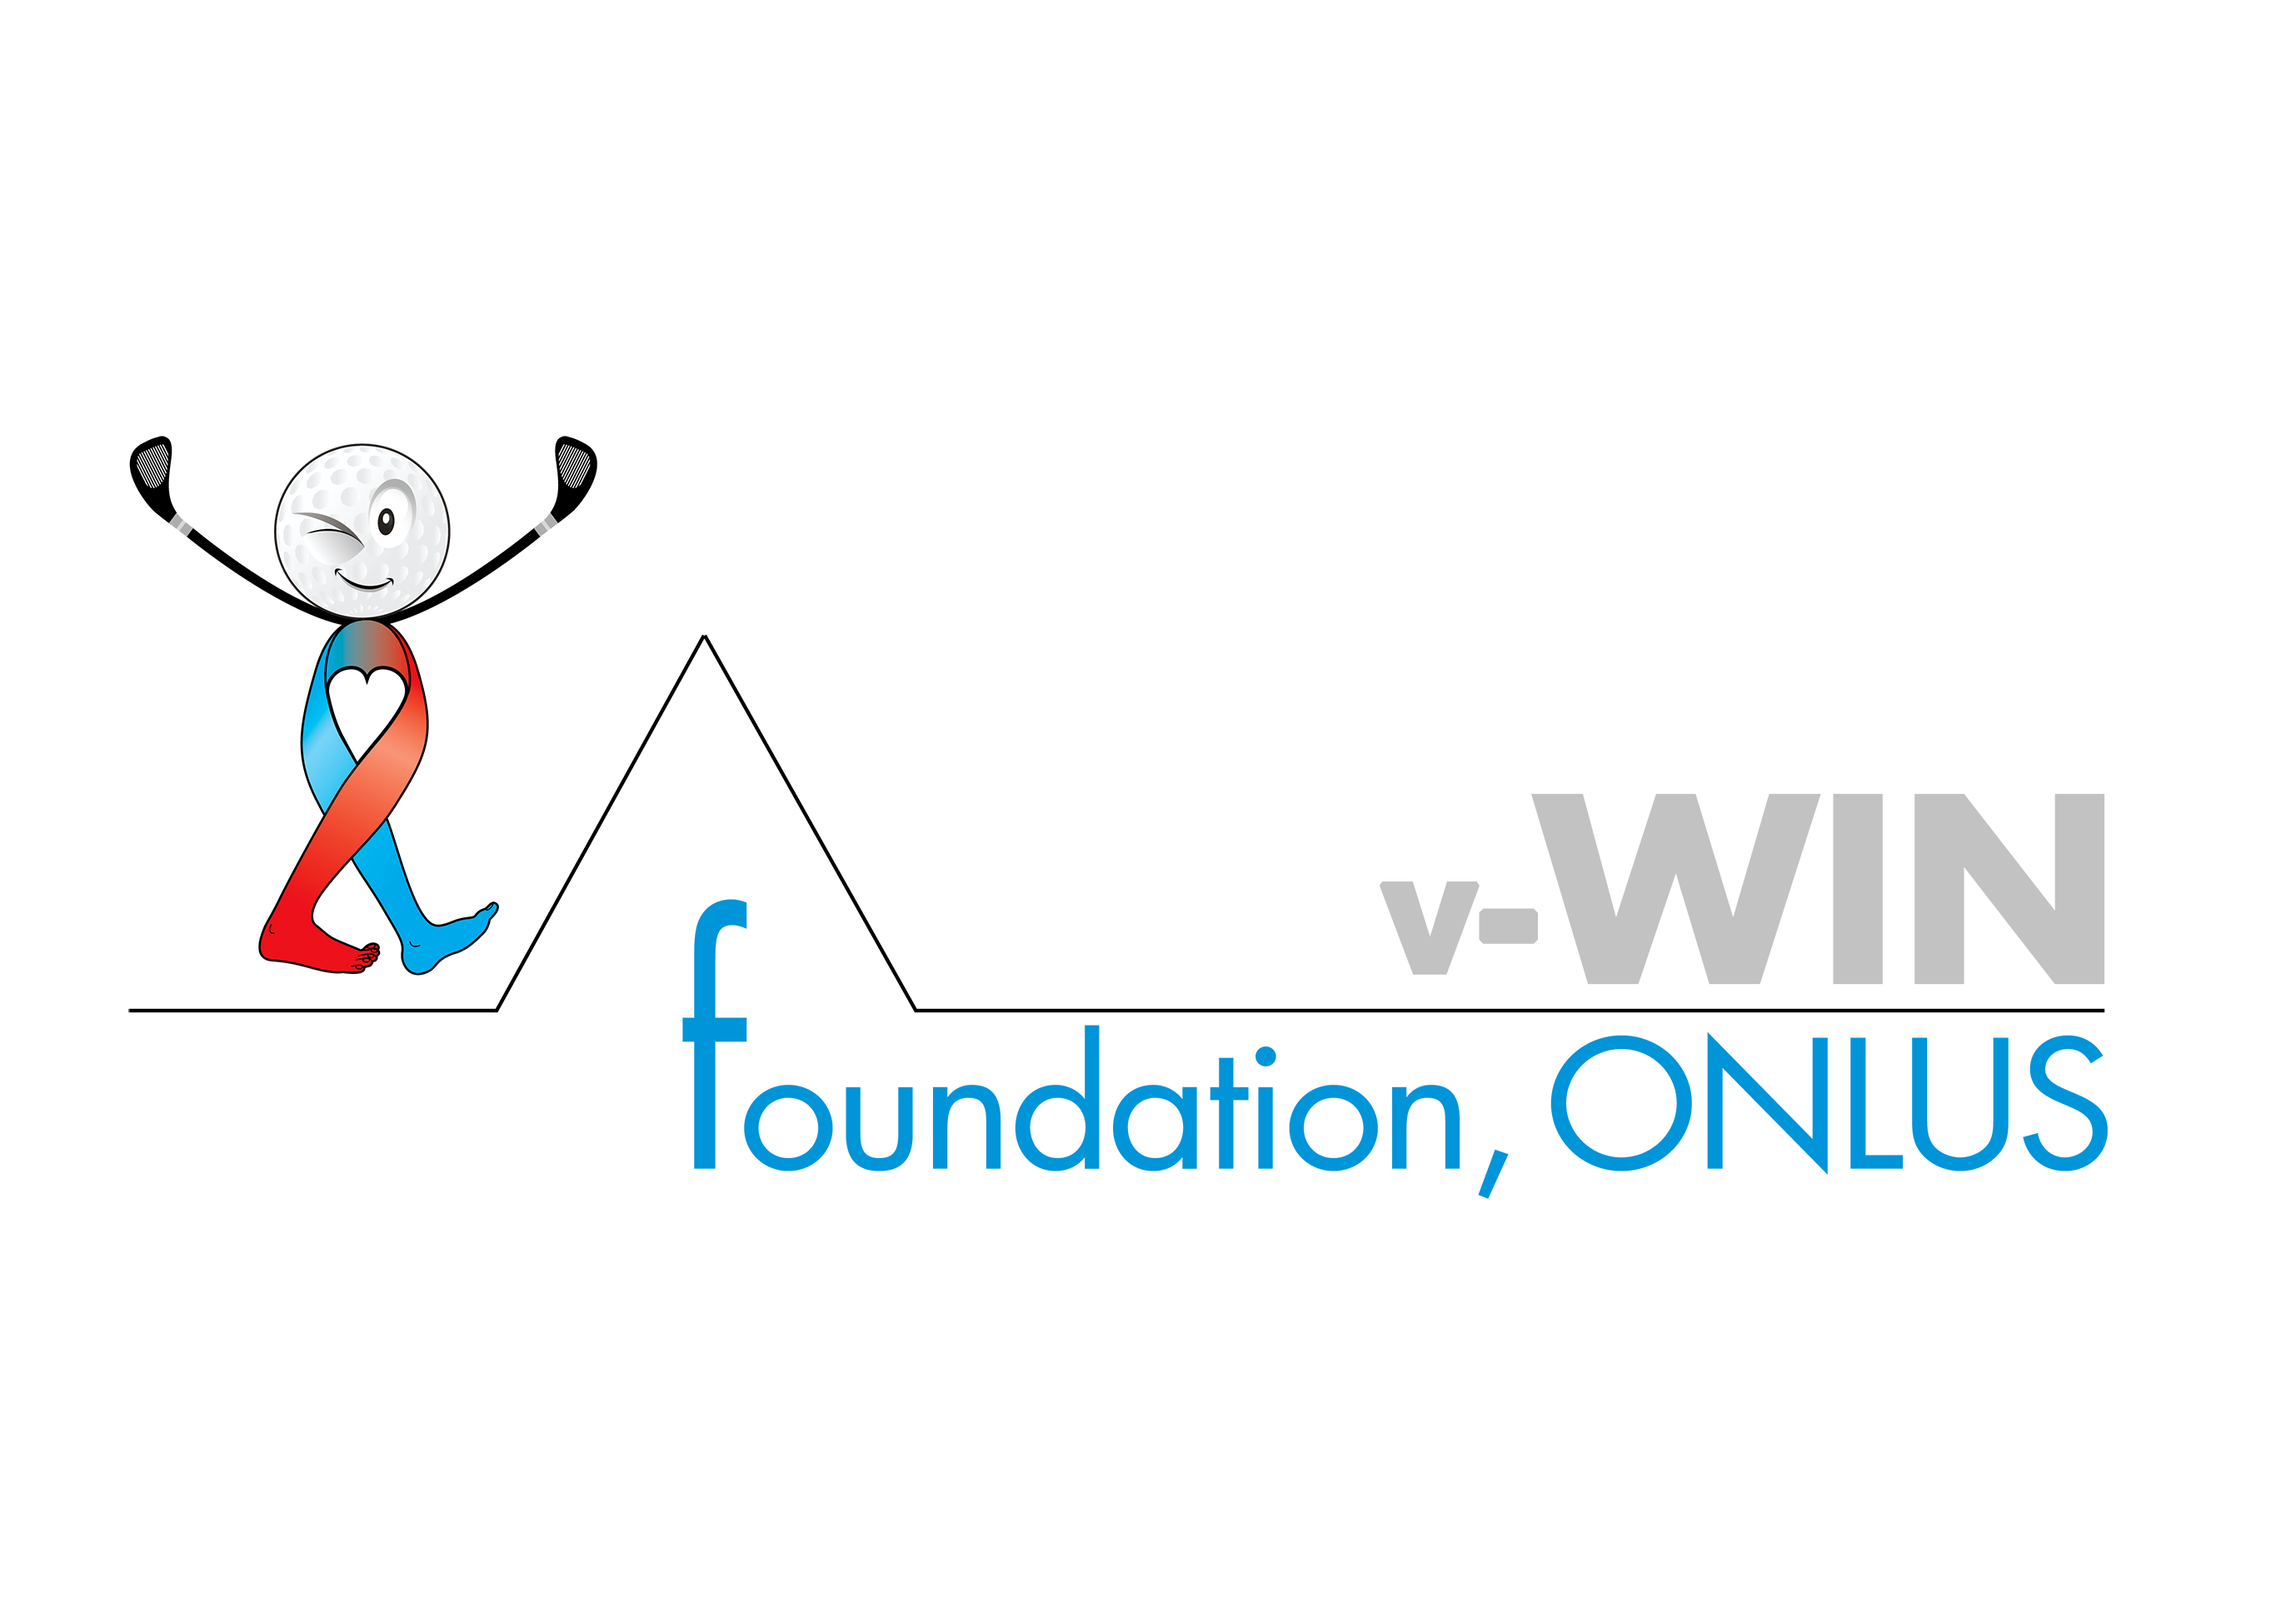 vWIN Foundation